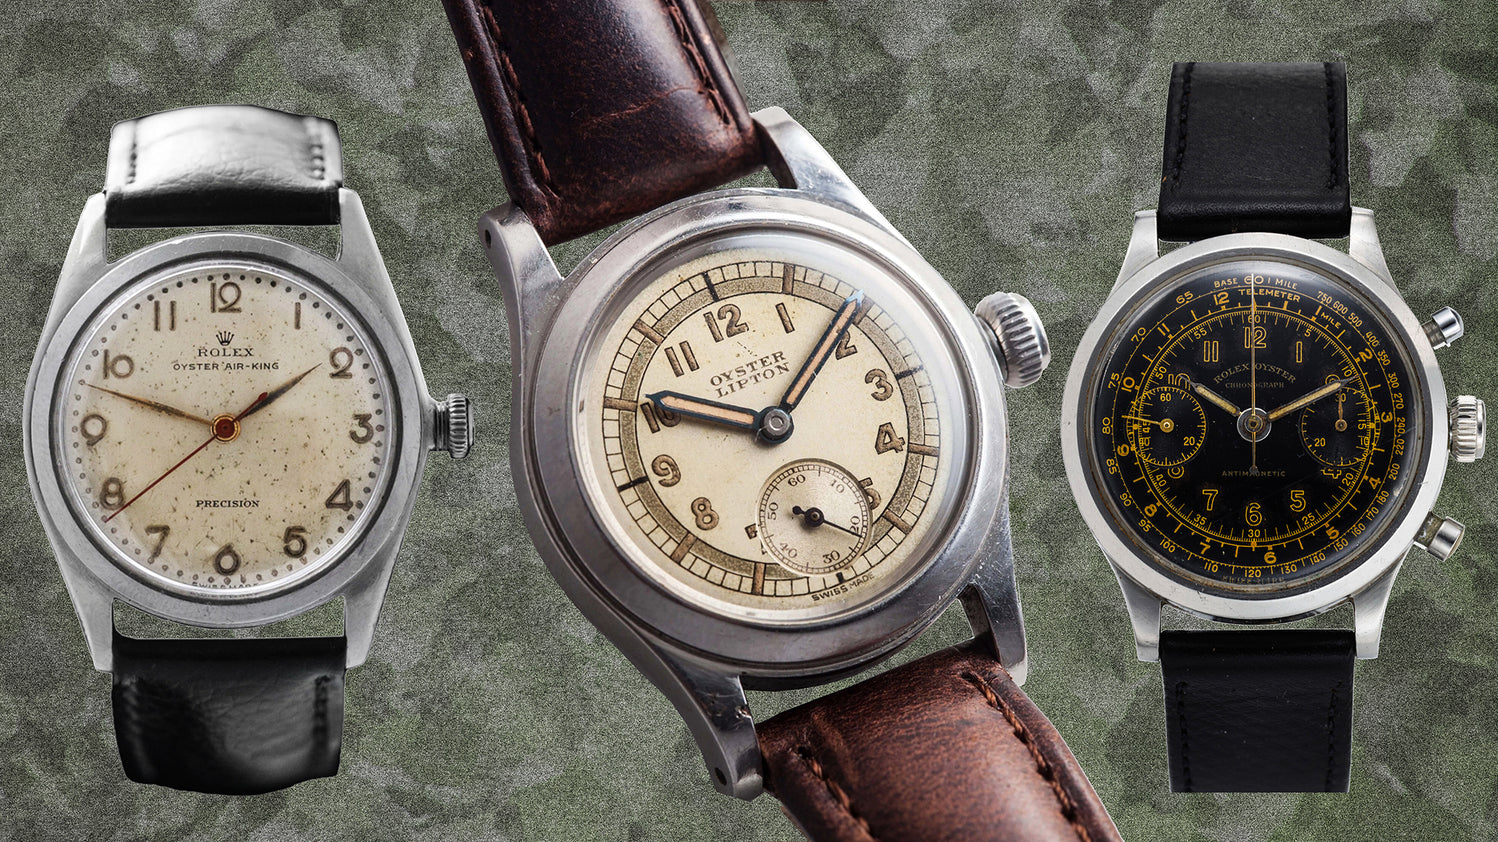 Rolex Watches of World War II – Analog:Shift